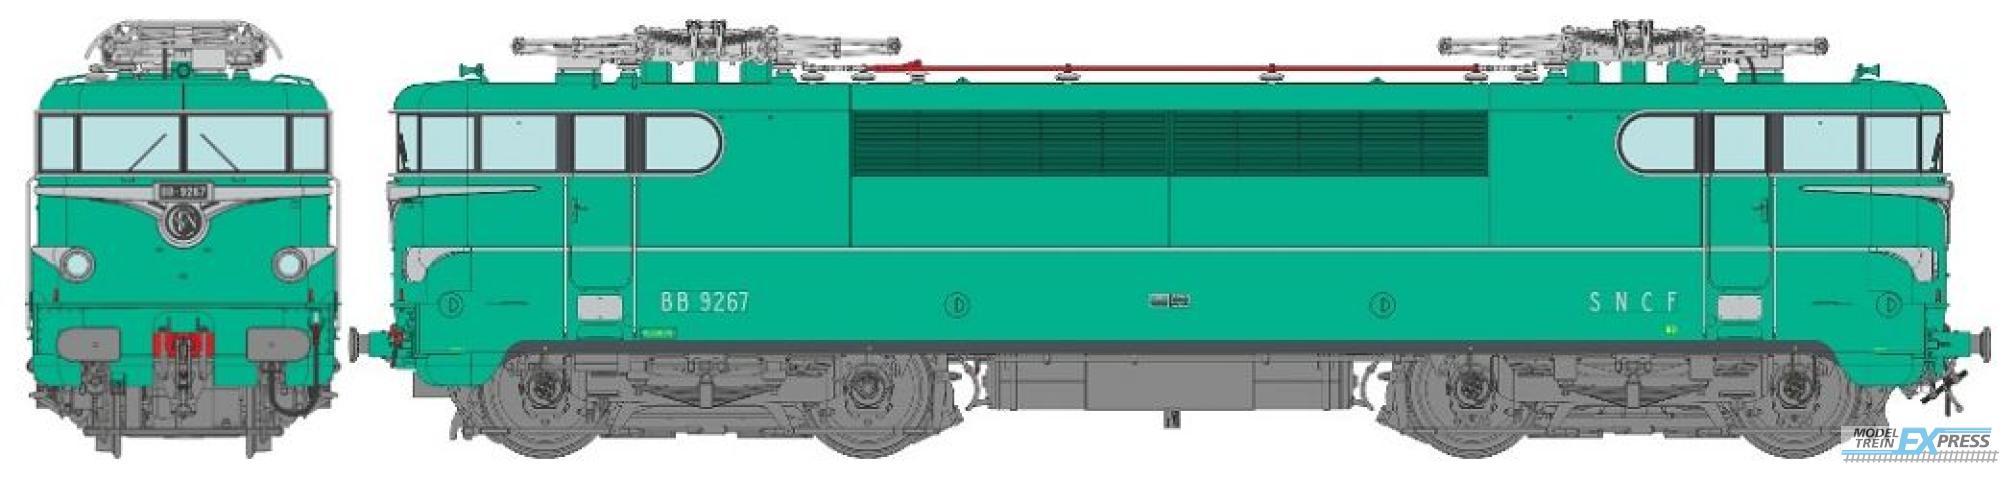 REE models MB-081 BB 9267 Origin Green, Lyon-Mouche, Plate MISTRAL, Era III - ANALOG DC